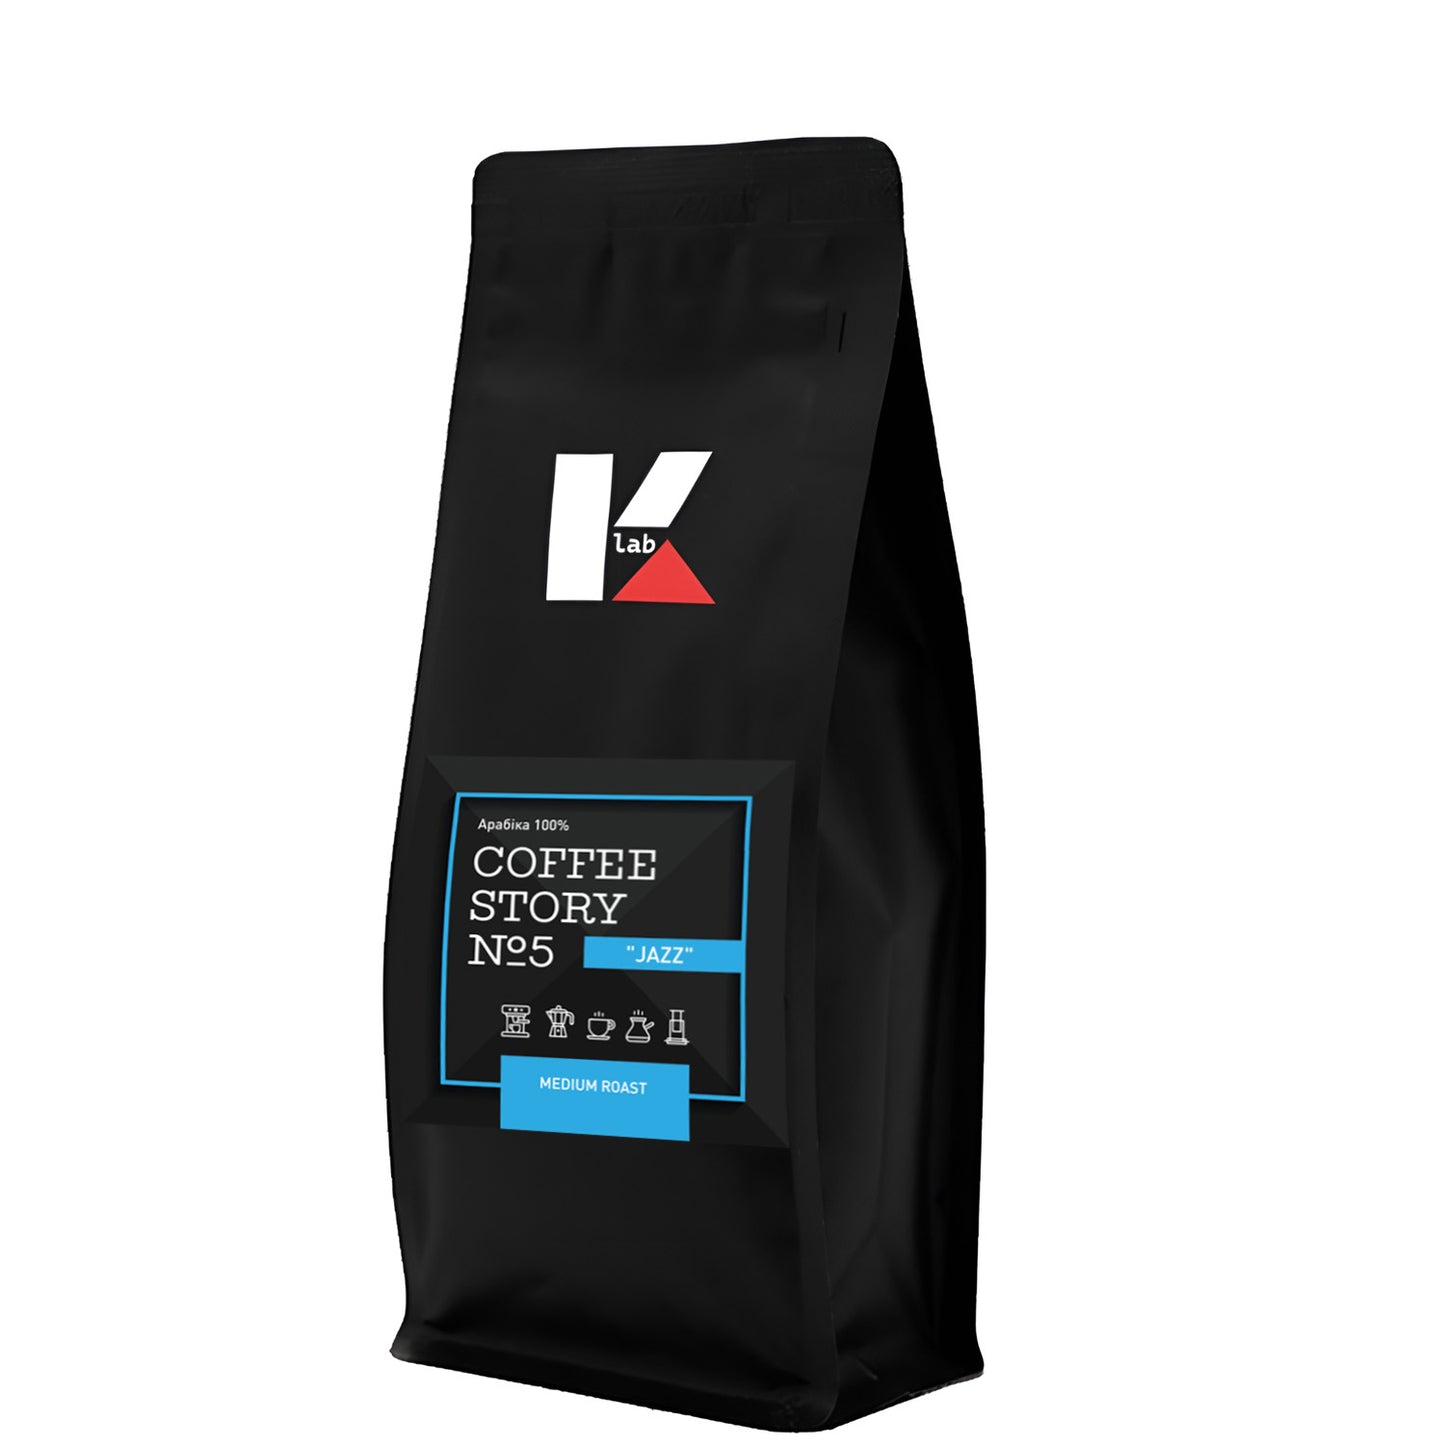 COFFEE STORY №5 - Klab (1kg front)